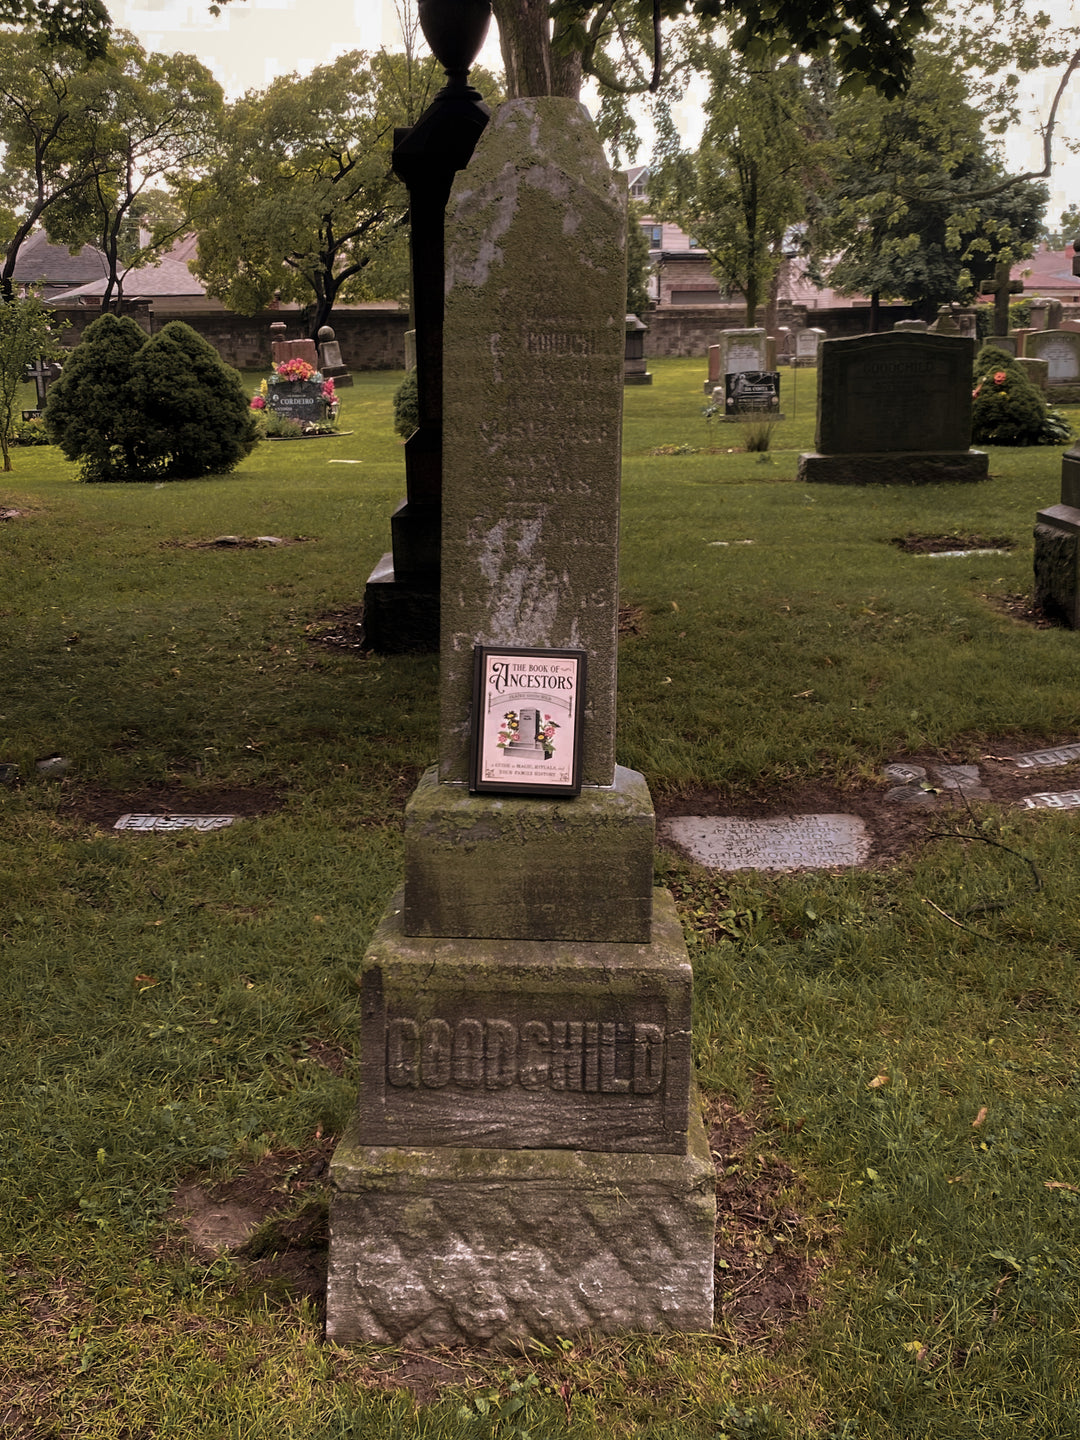 Cemeteries: Cities of the Dead - Analyzing Gravestones